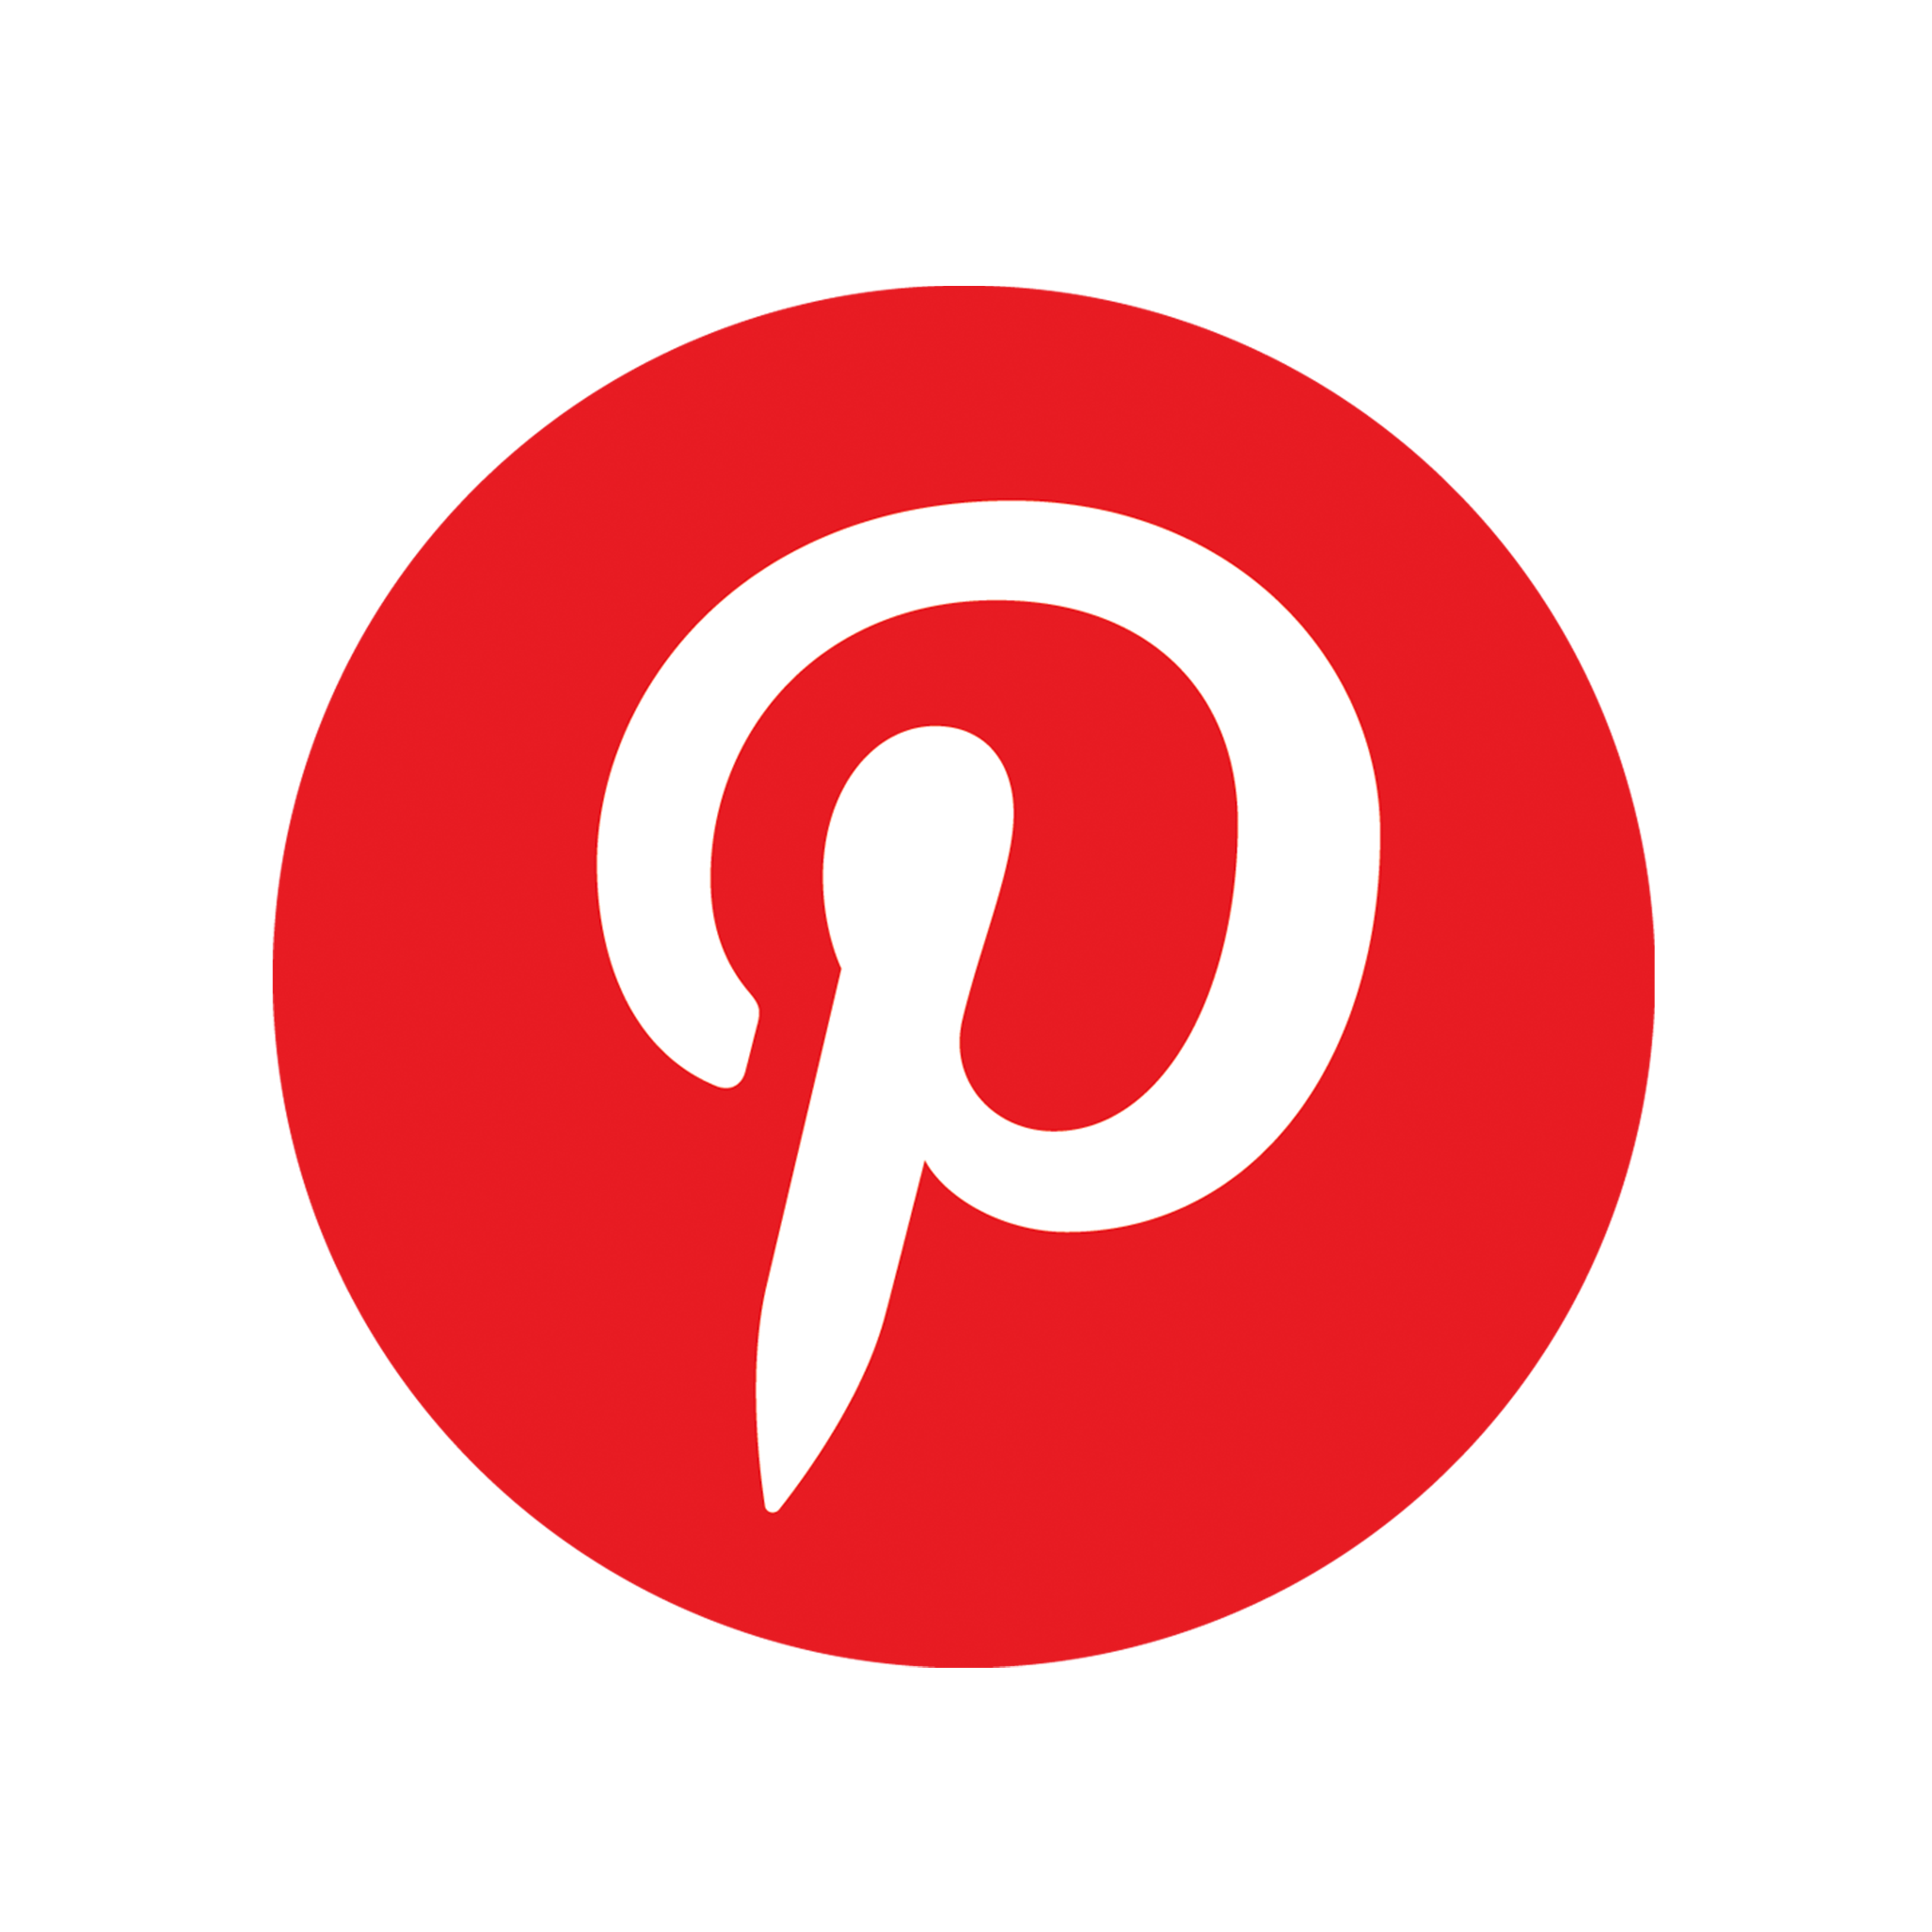 Pinterest Logo Transparent Pn